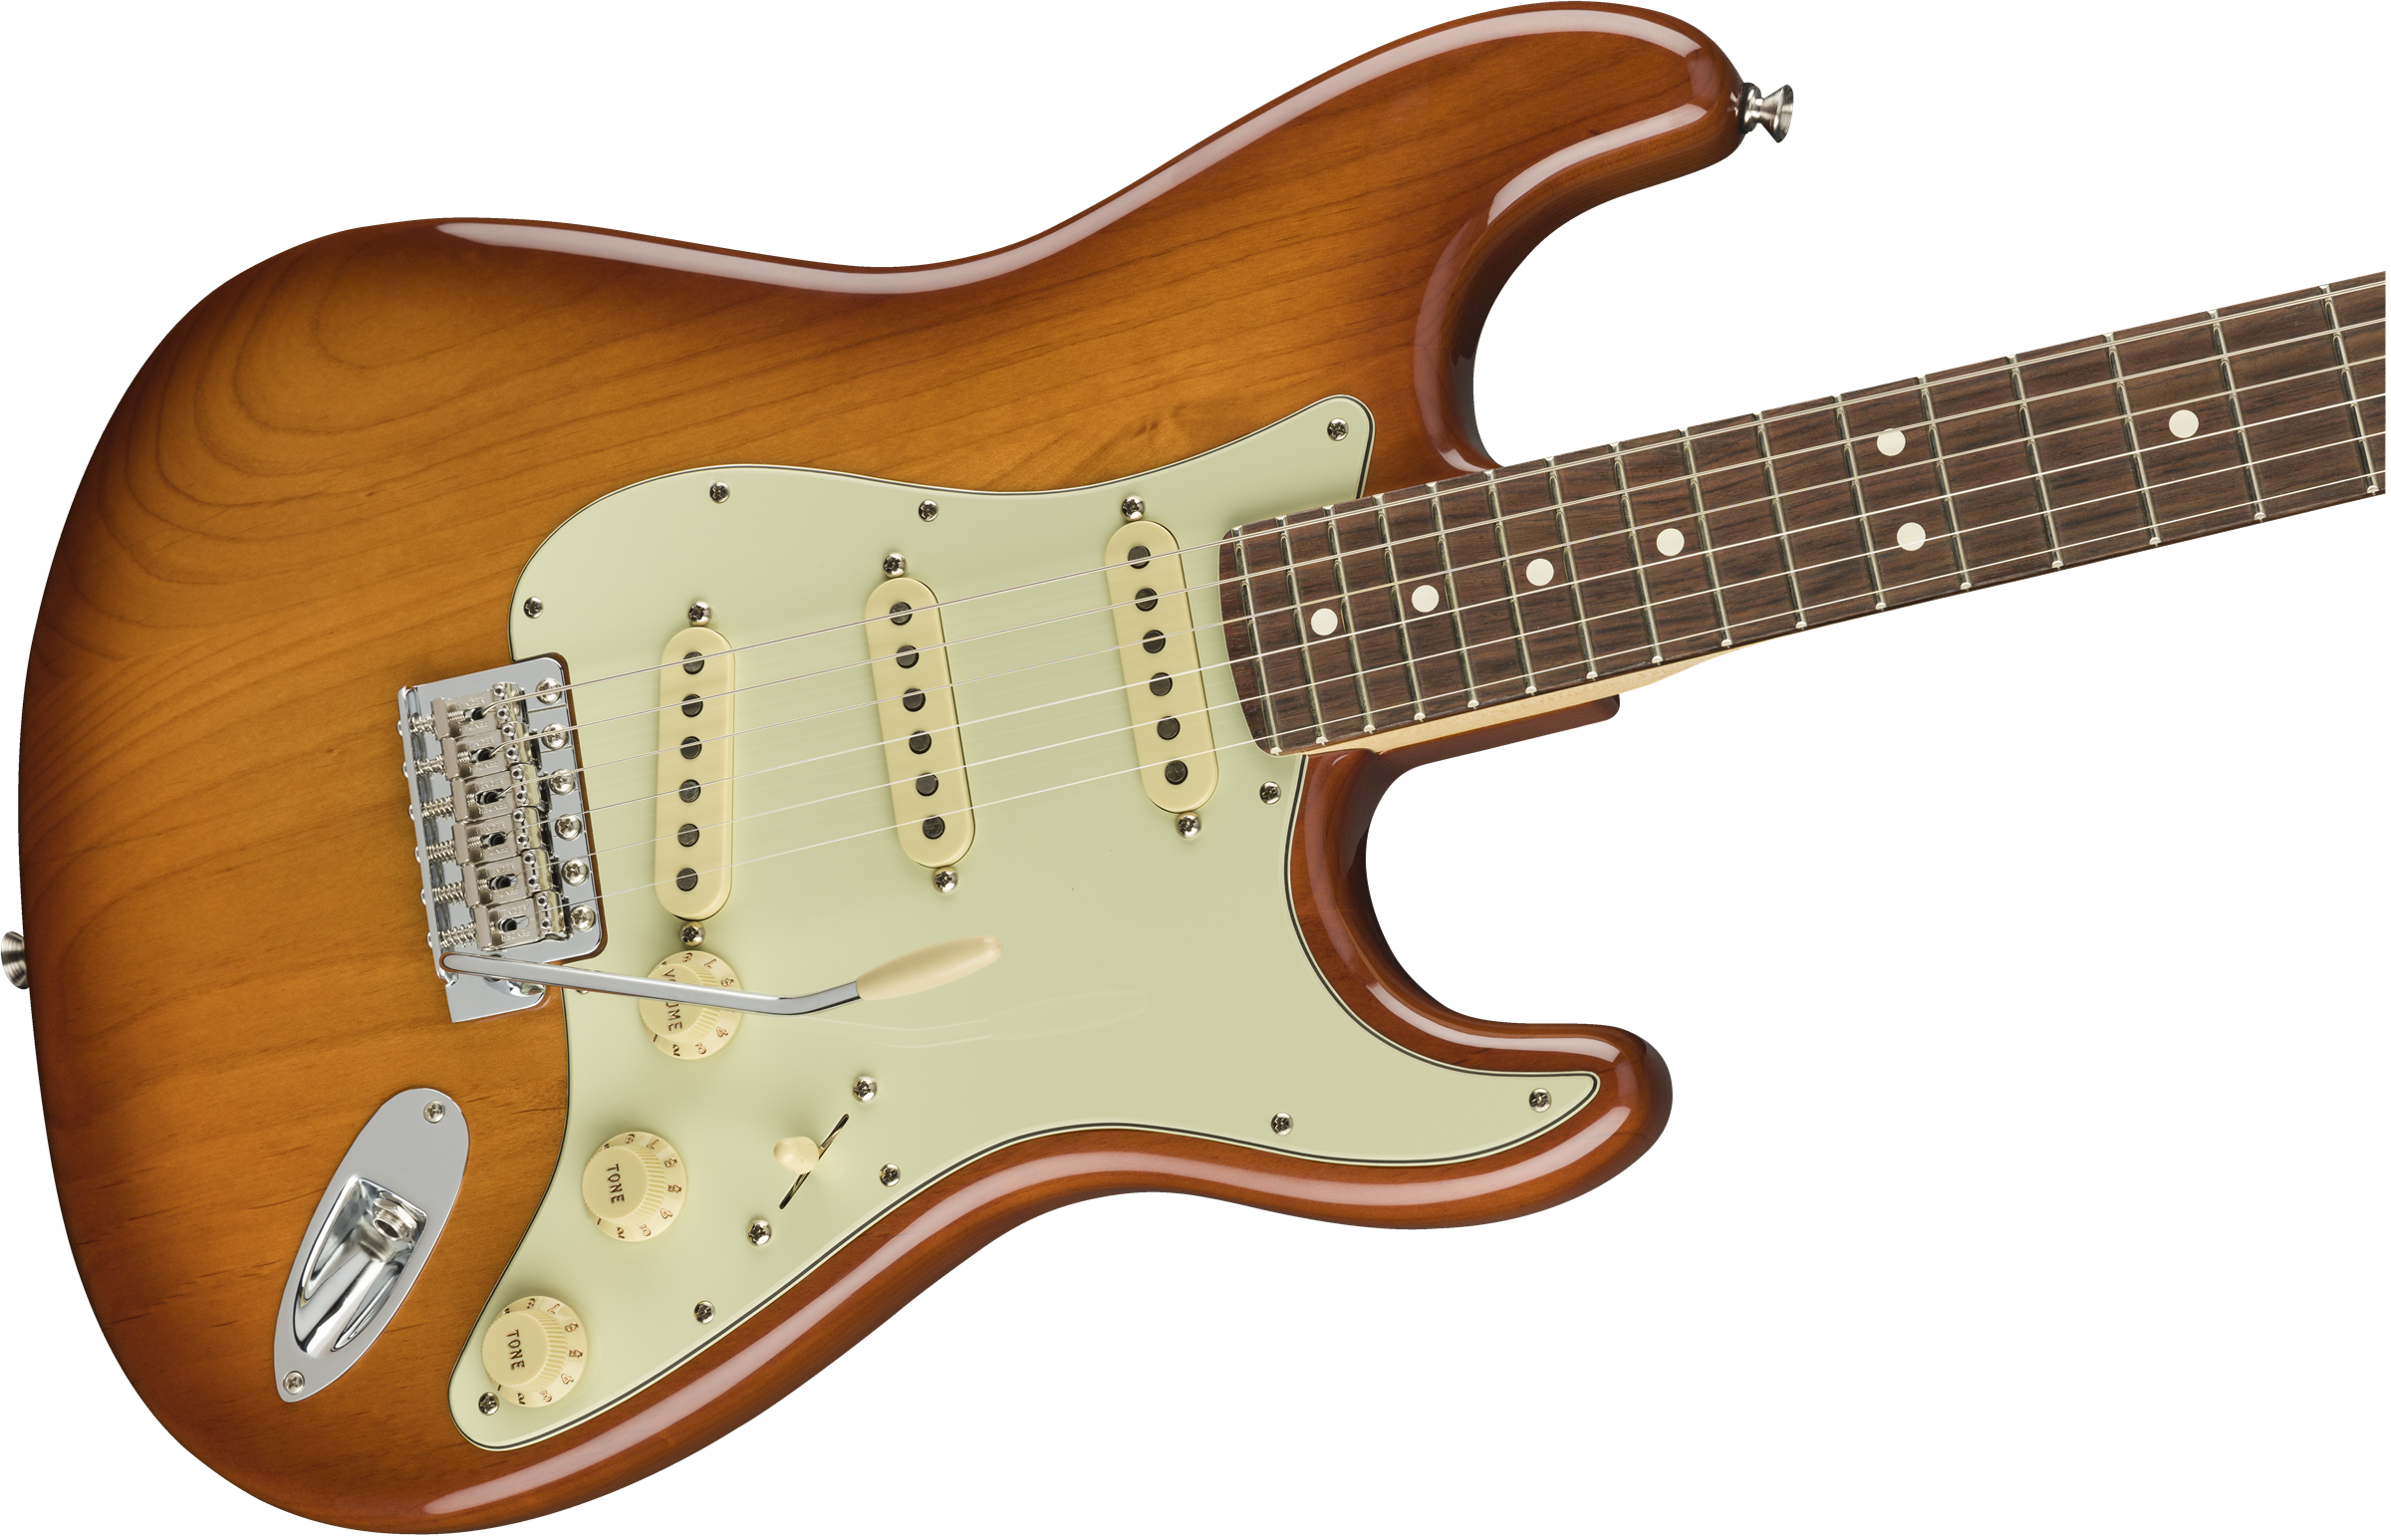 Fender American Performer Stratocaster Rosewood Fingerboard - Honey Burst F-0114910342 SERIAL NUMBER US22064343 - 7.9 LBS